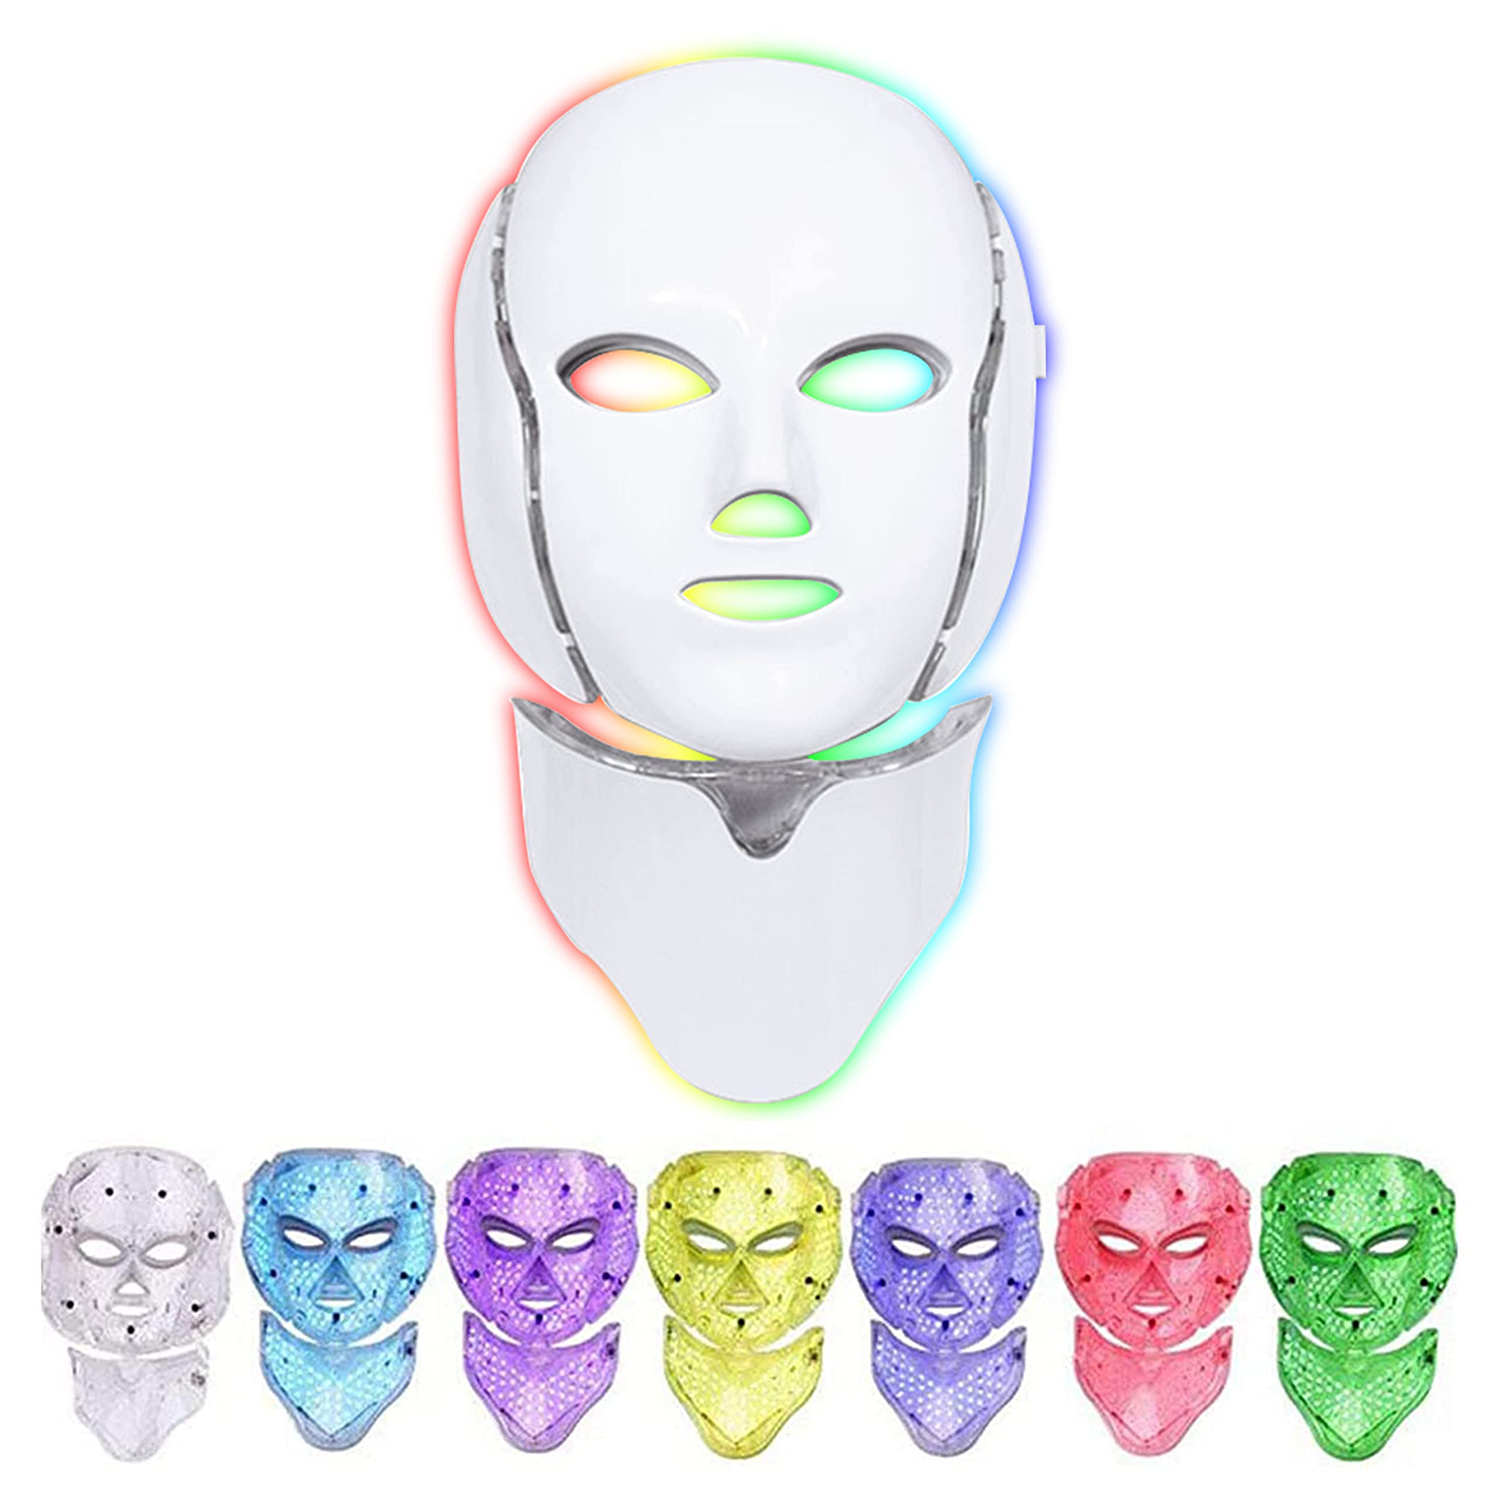 7-farbige LED-Gesichtsmaske